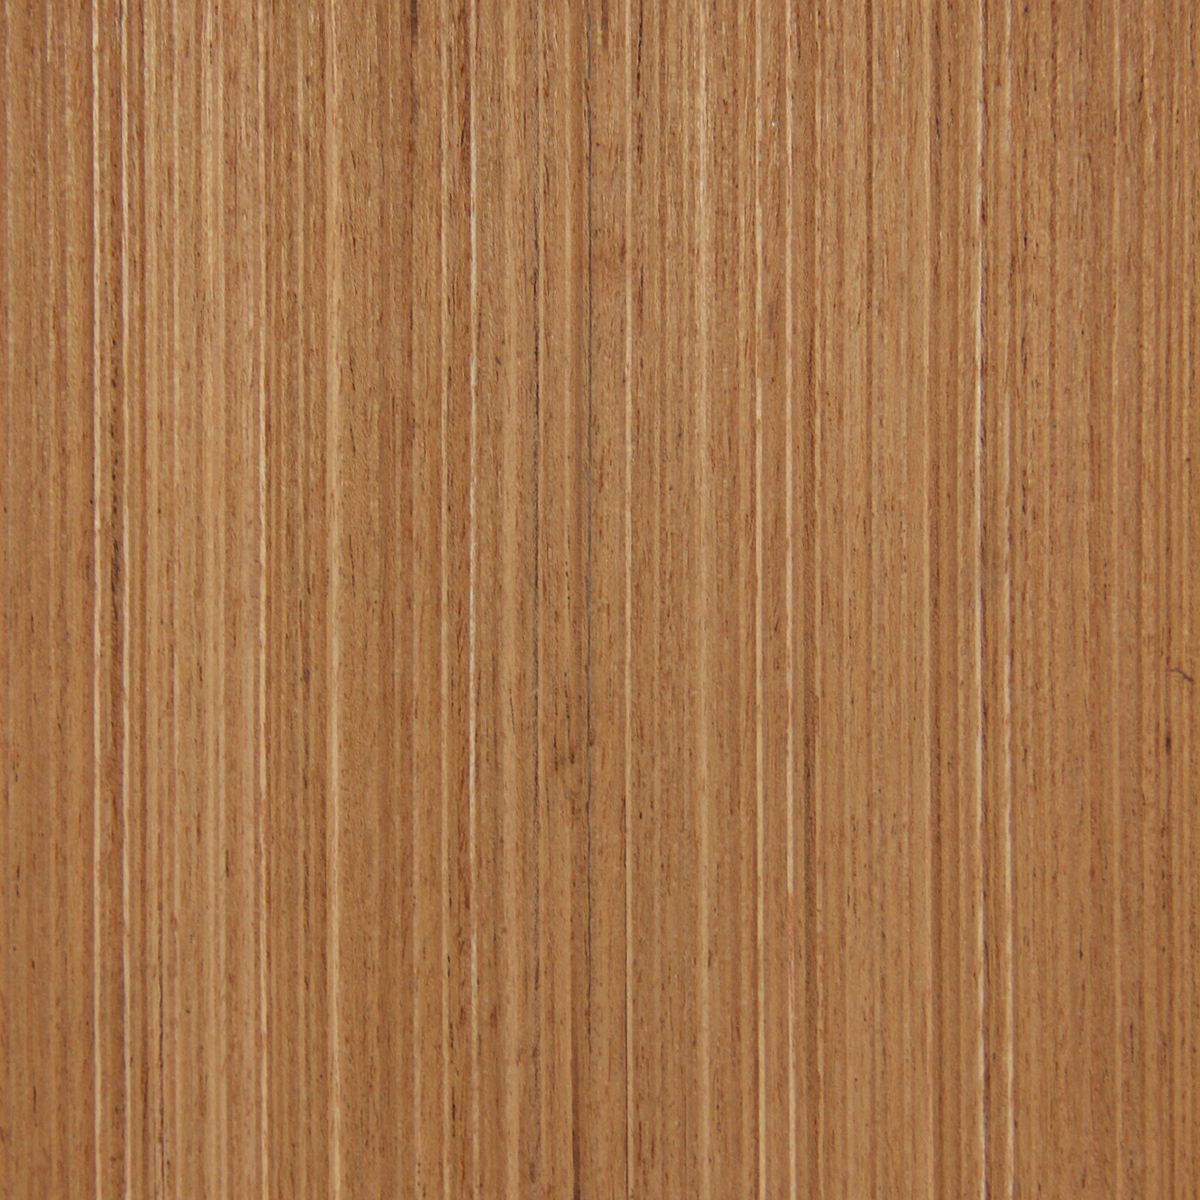 Mahogany, Plantation Truewood - Timber Veneer & Plywood Species